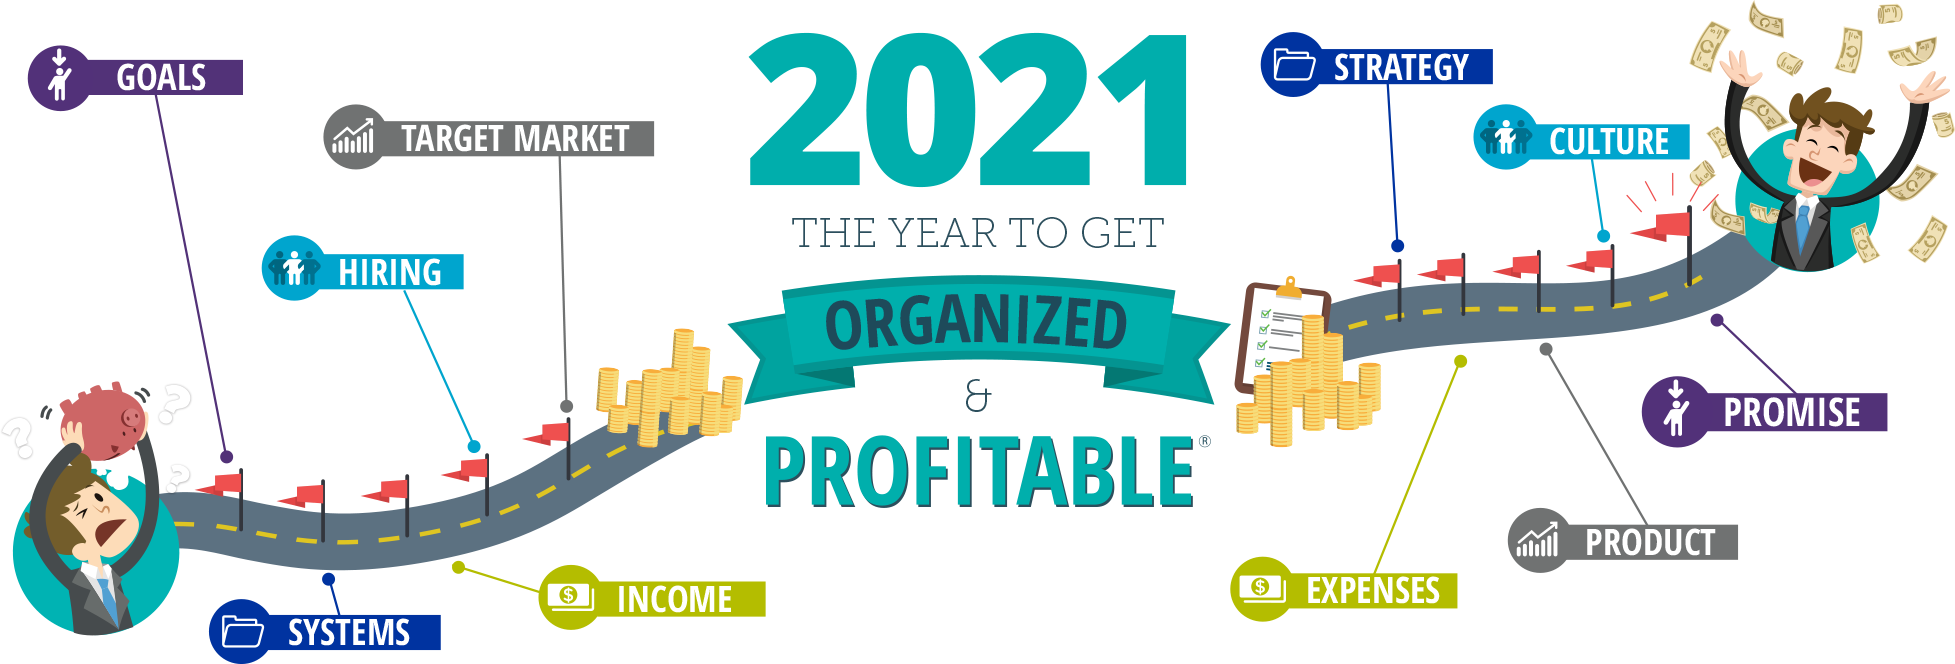 2021 Organized & Profitable Roadmap